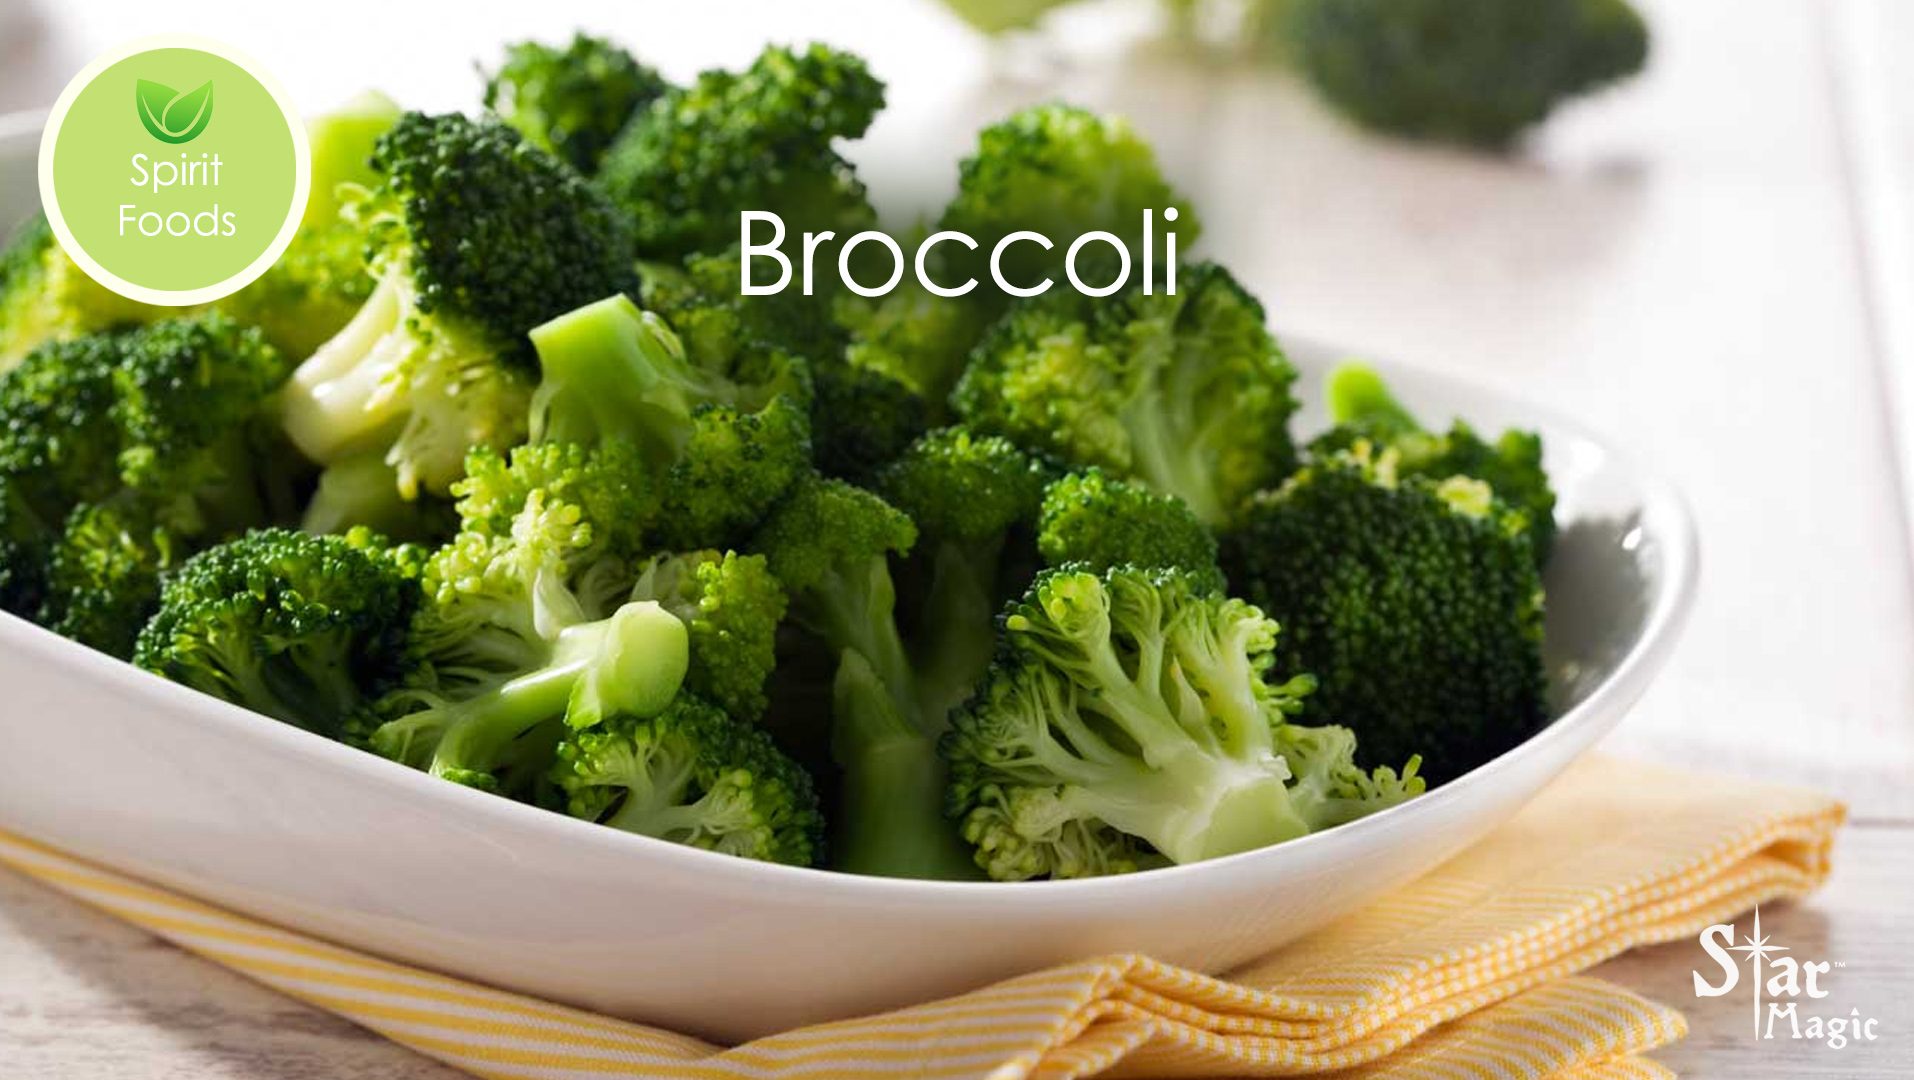 Spirit Food – Broccoli